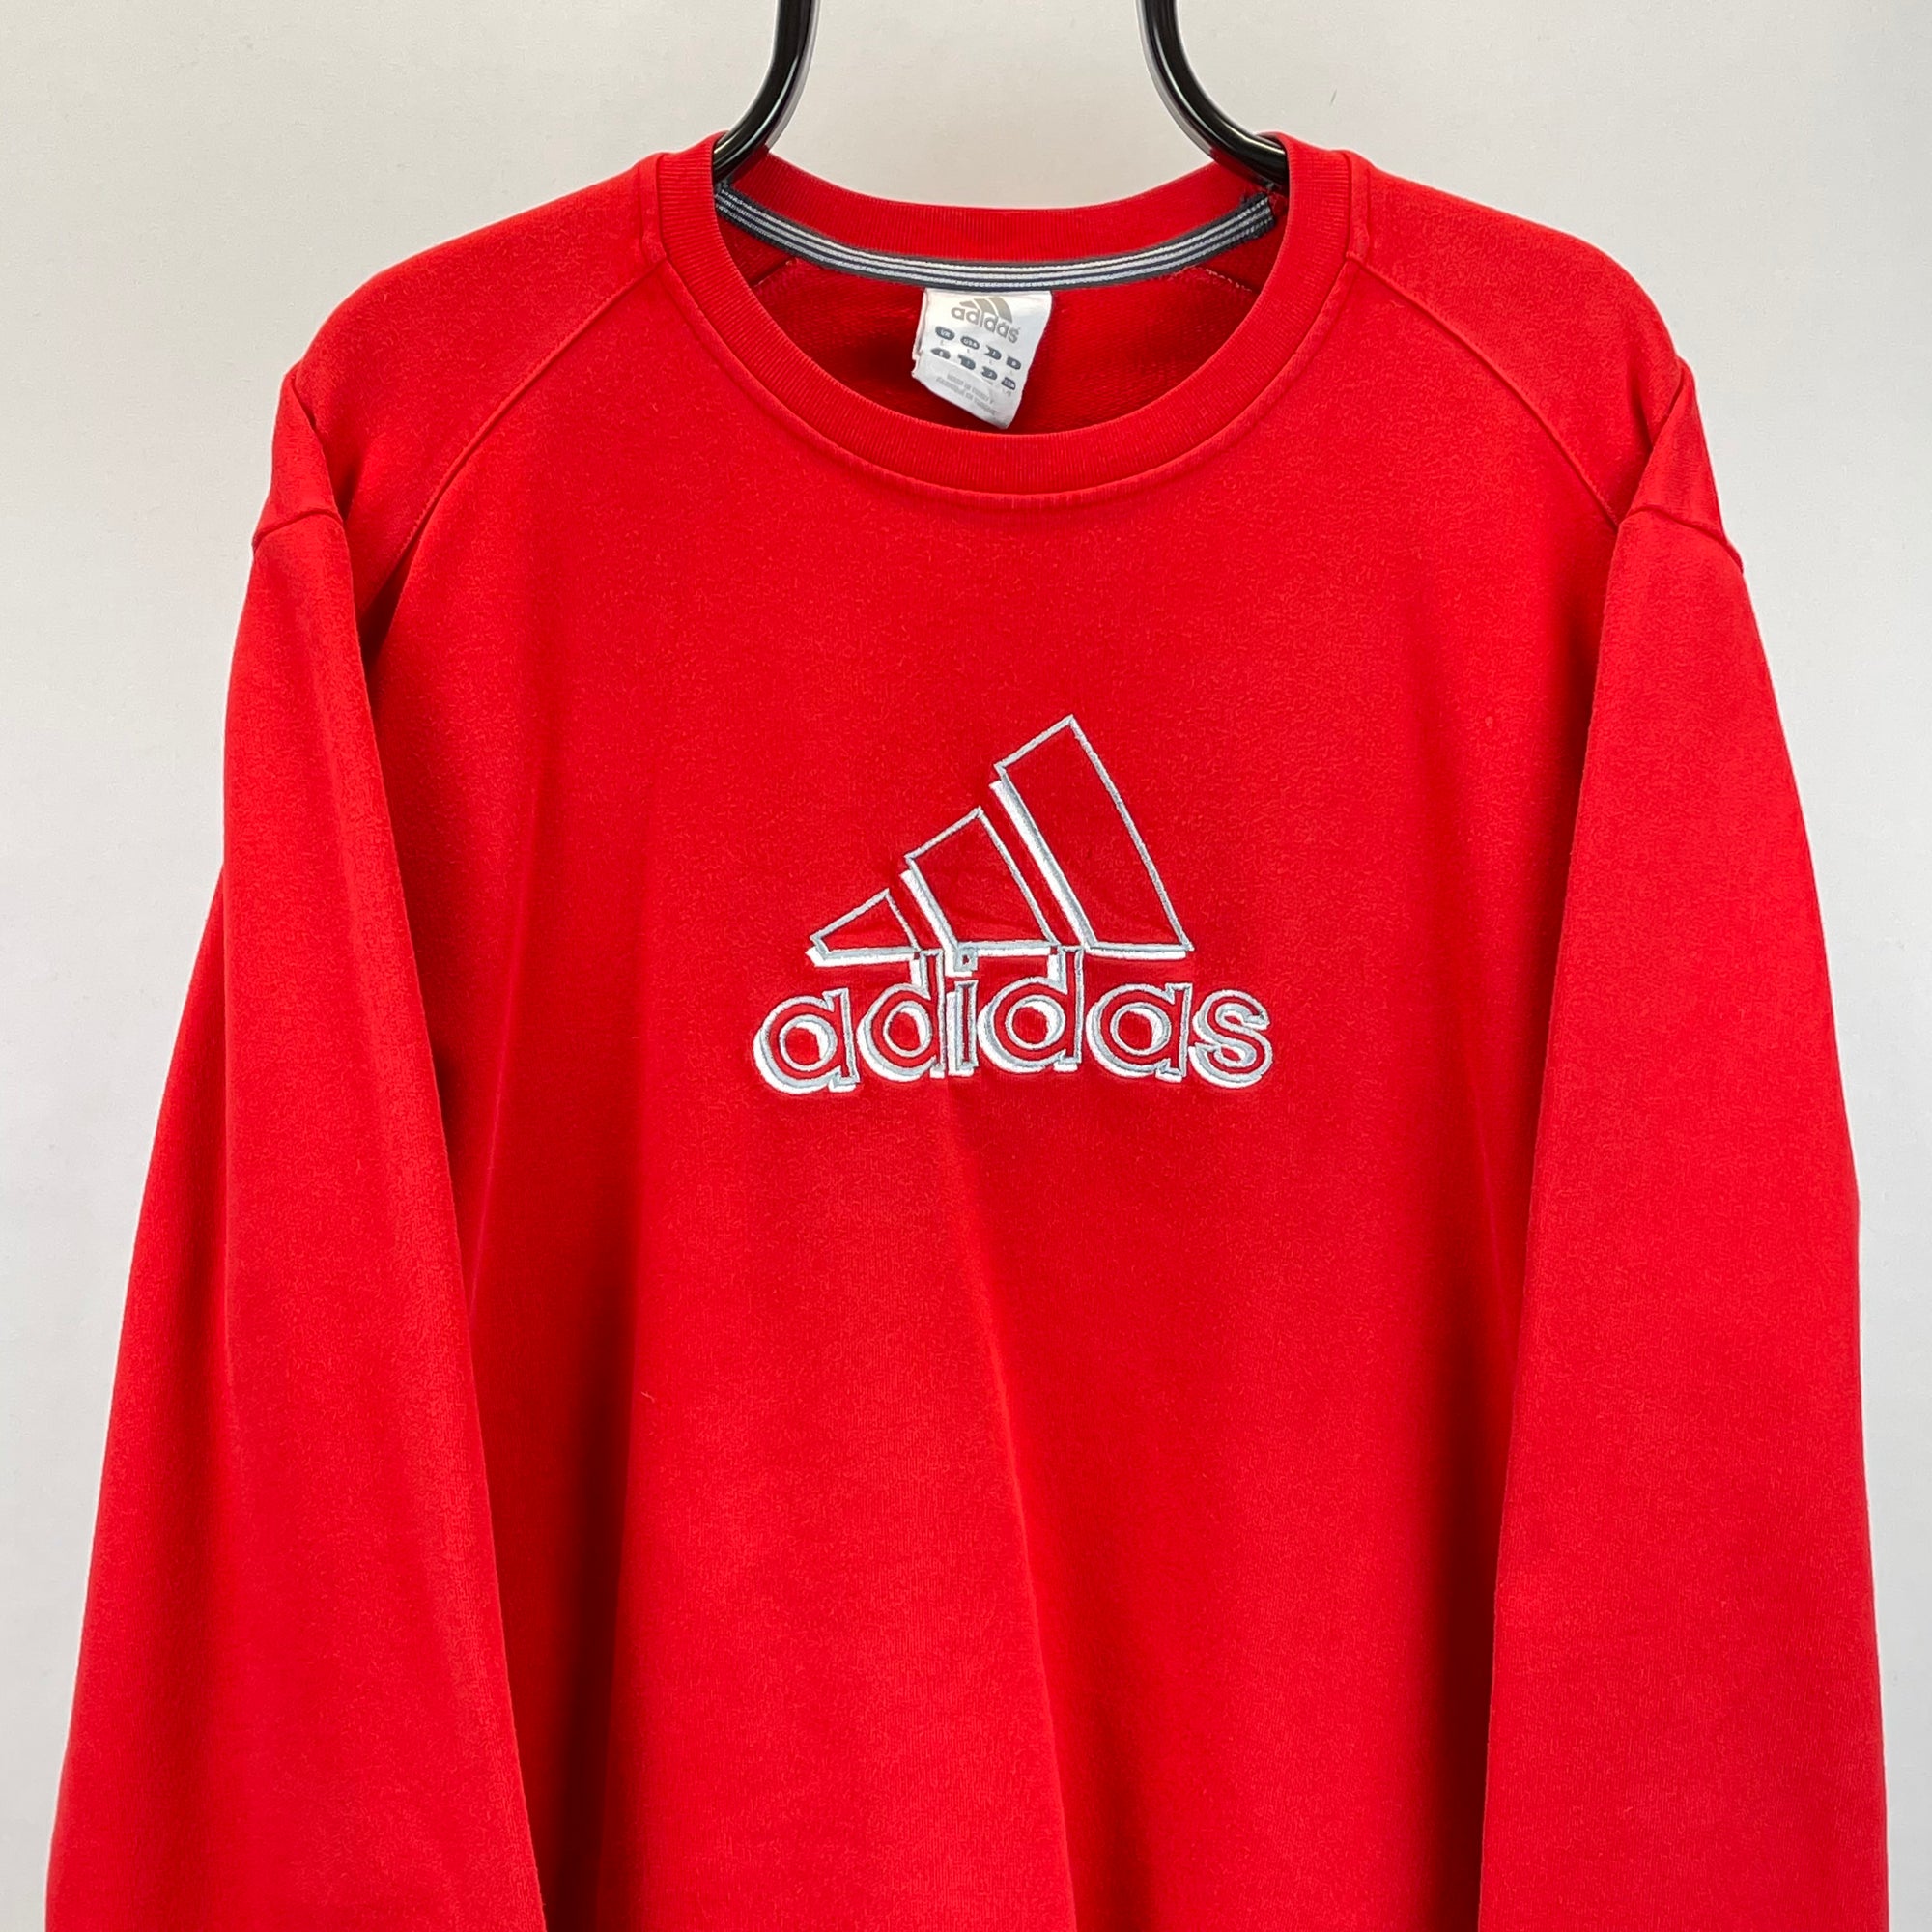 Vintage Adidas Spellout Sweatshirt in Red - Men's Medium/Women's Large